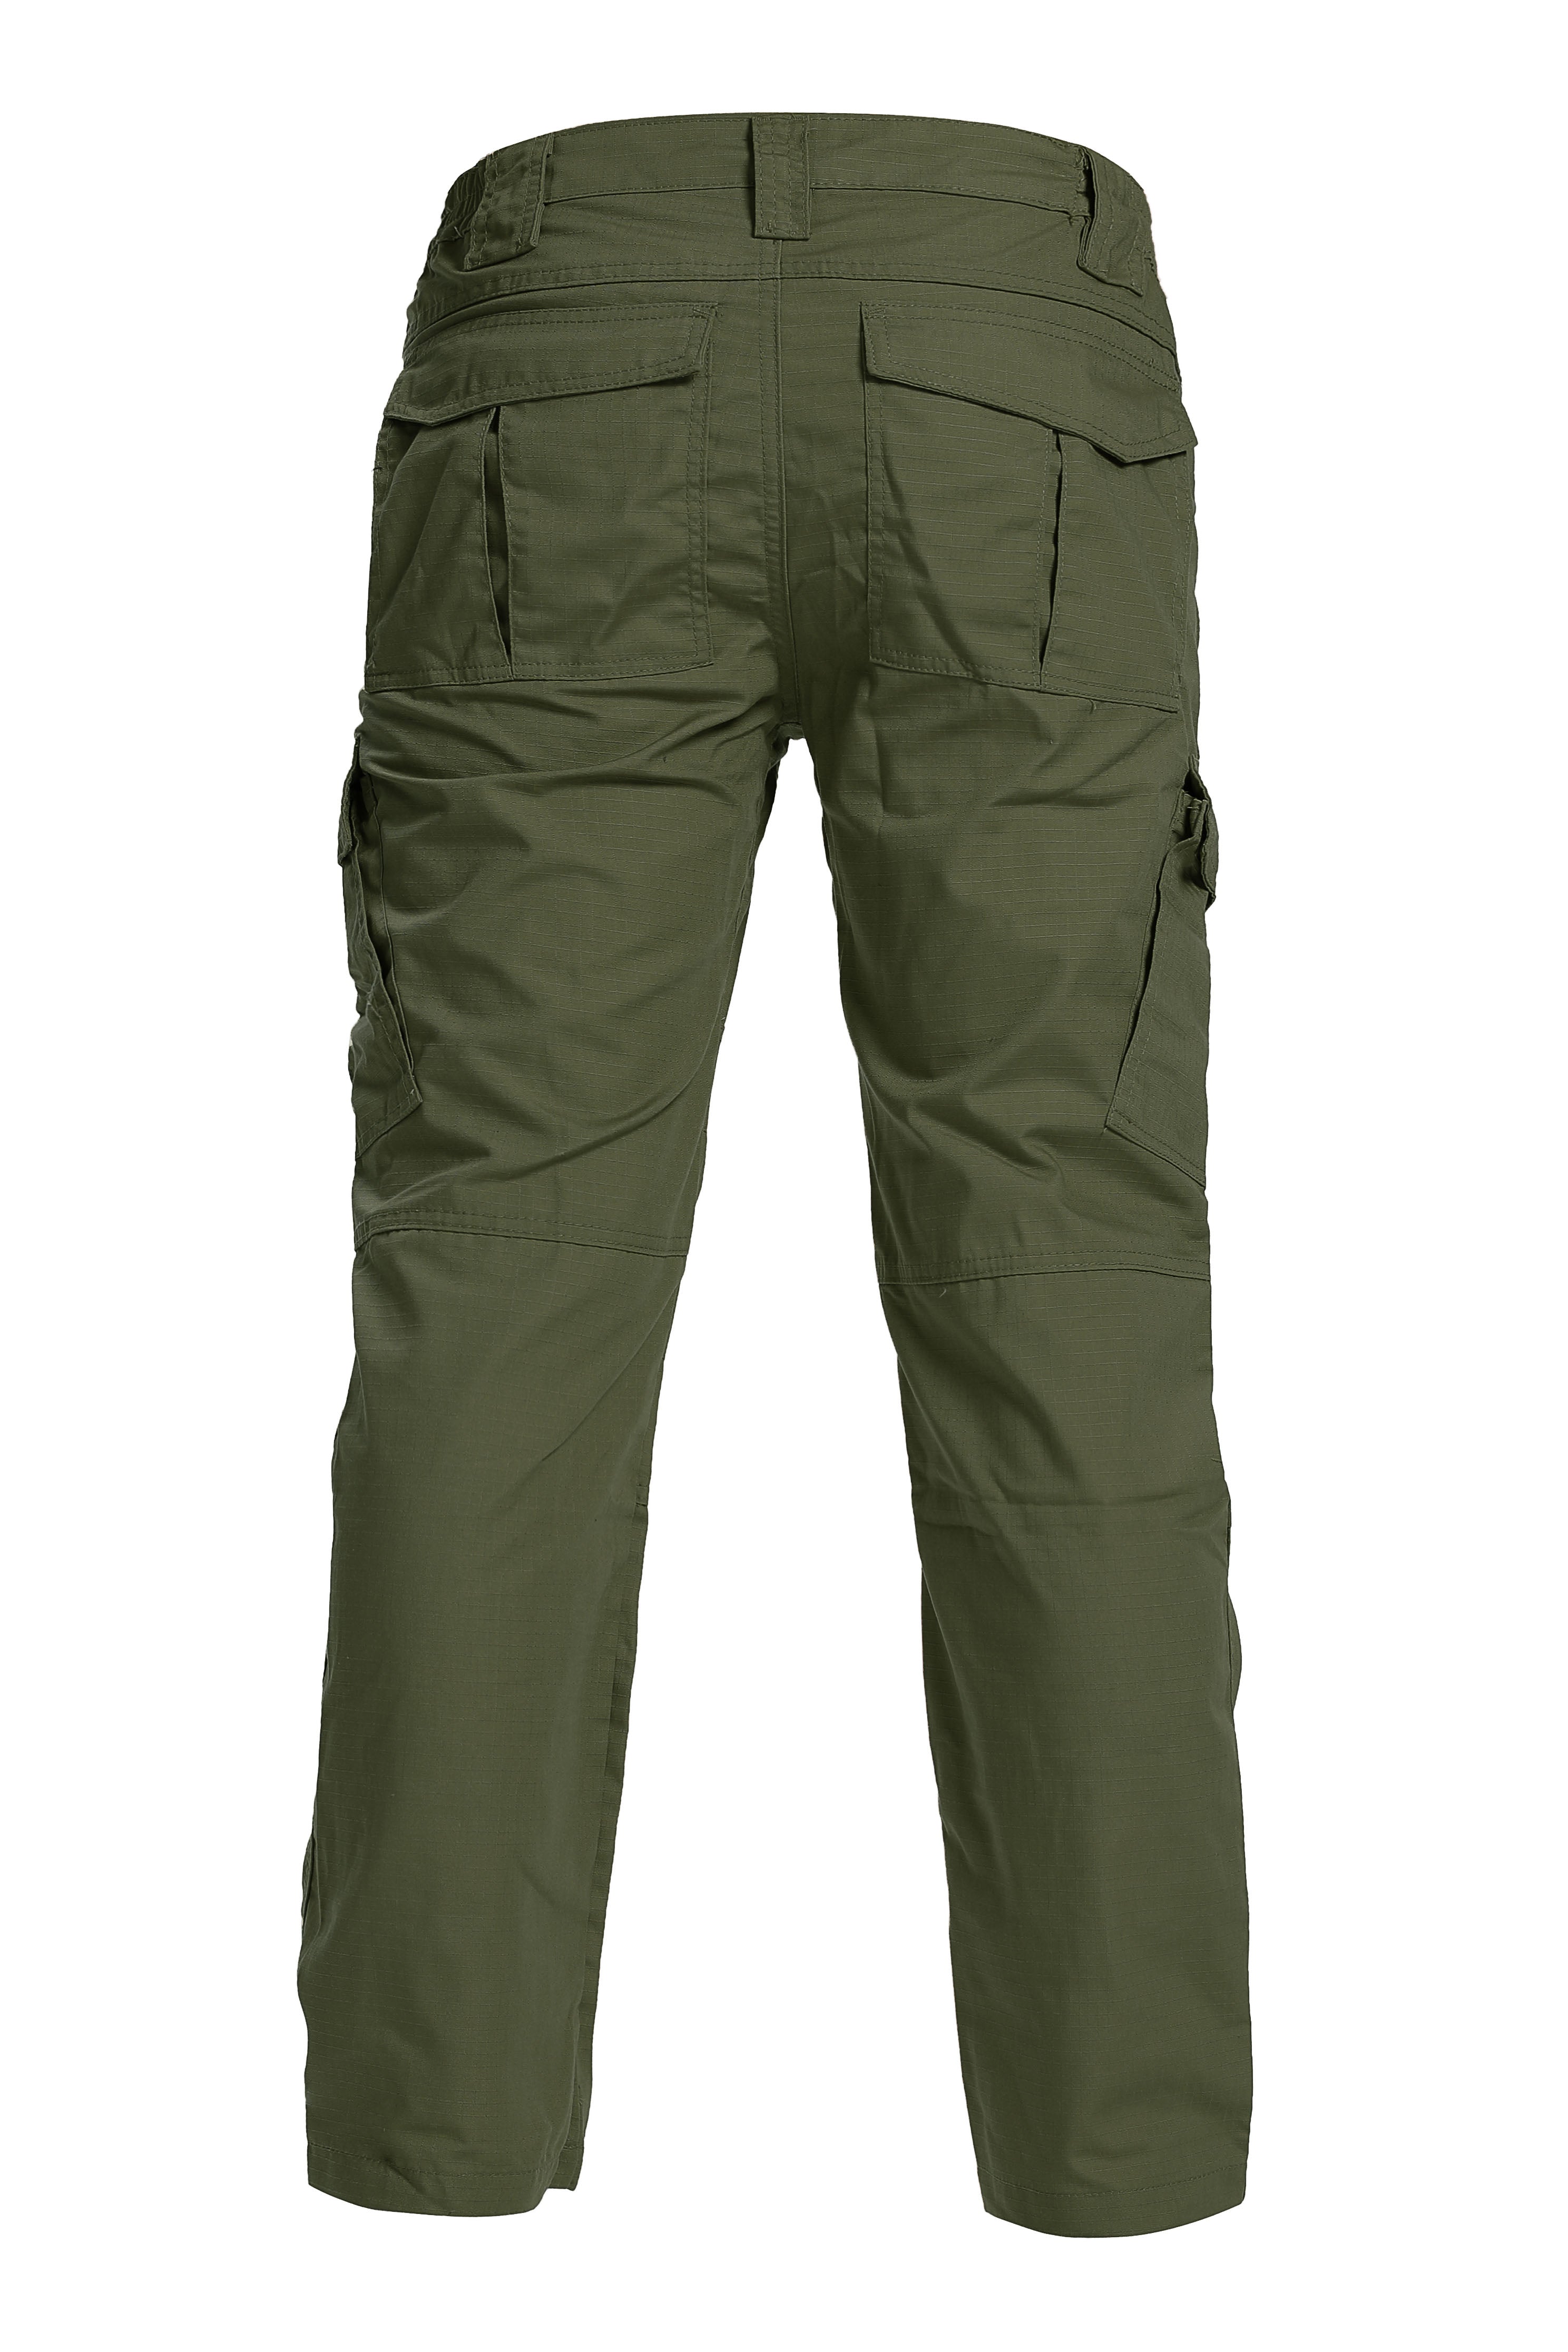 Rothco Tactical BDU (Battle Dress Uniform) Military Cargo Pants, 6XL  (59